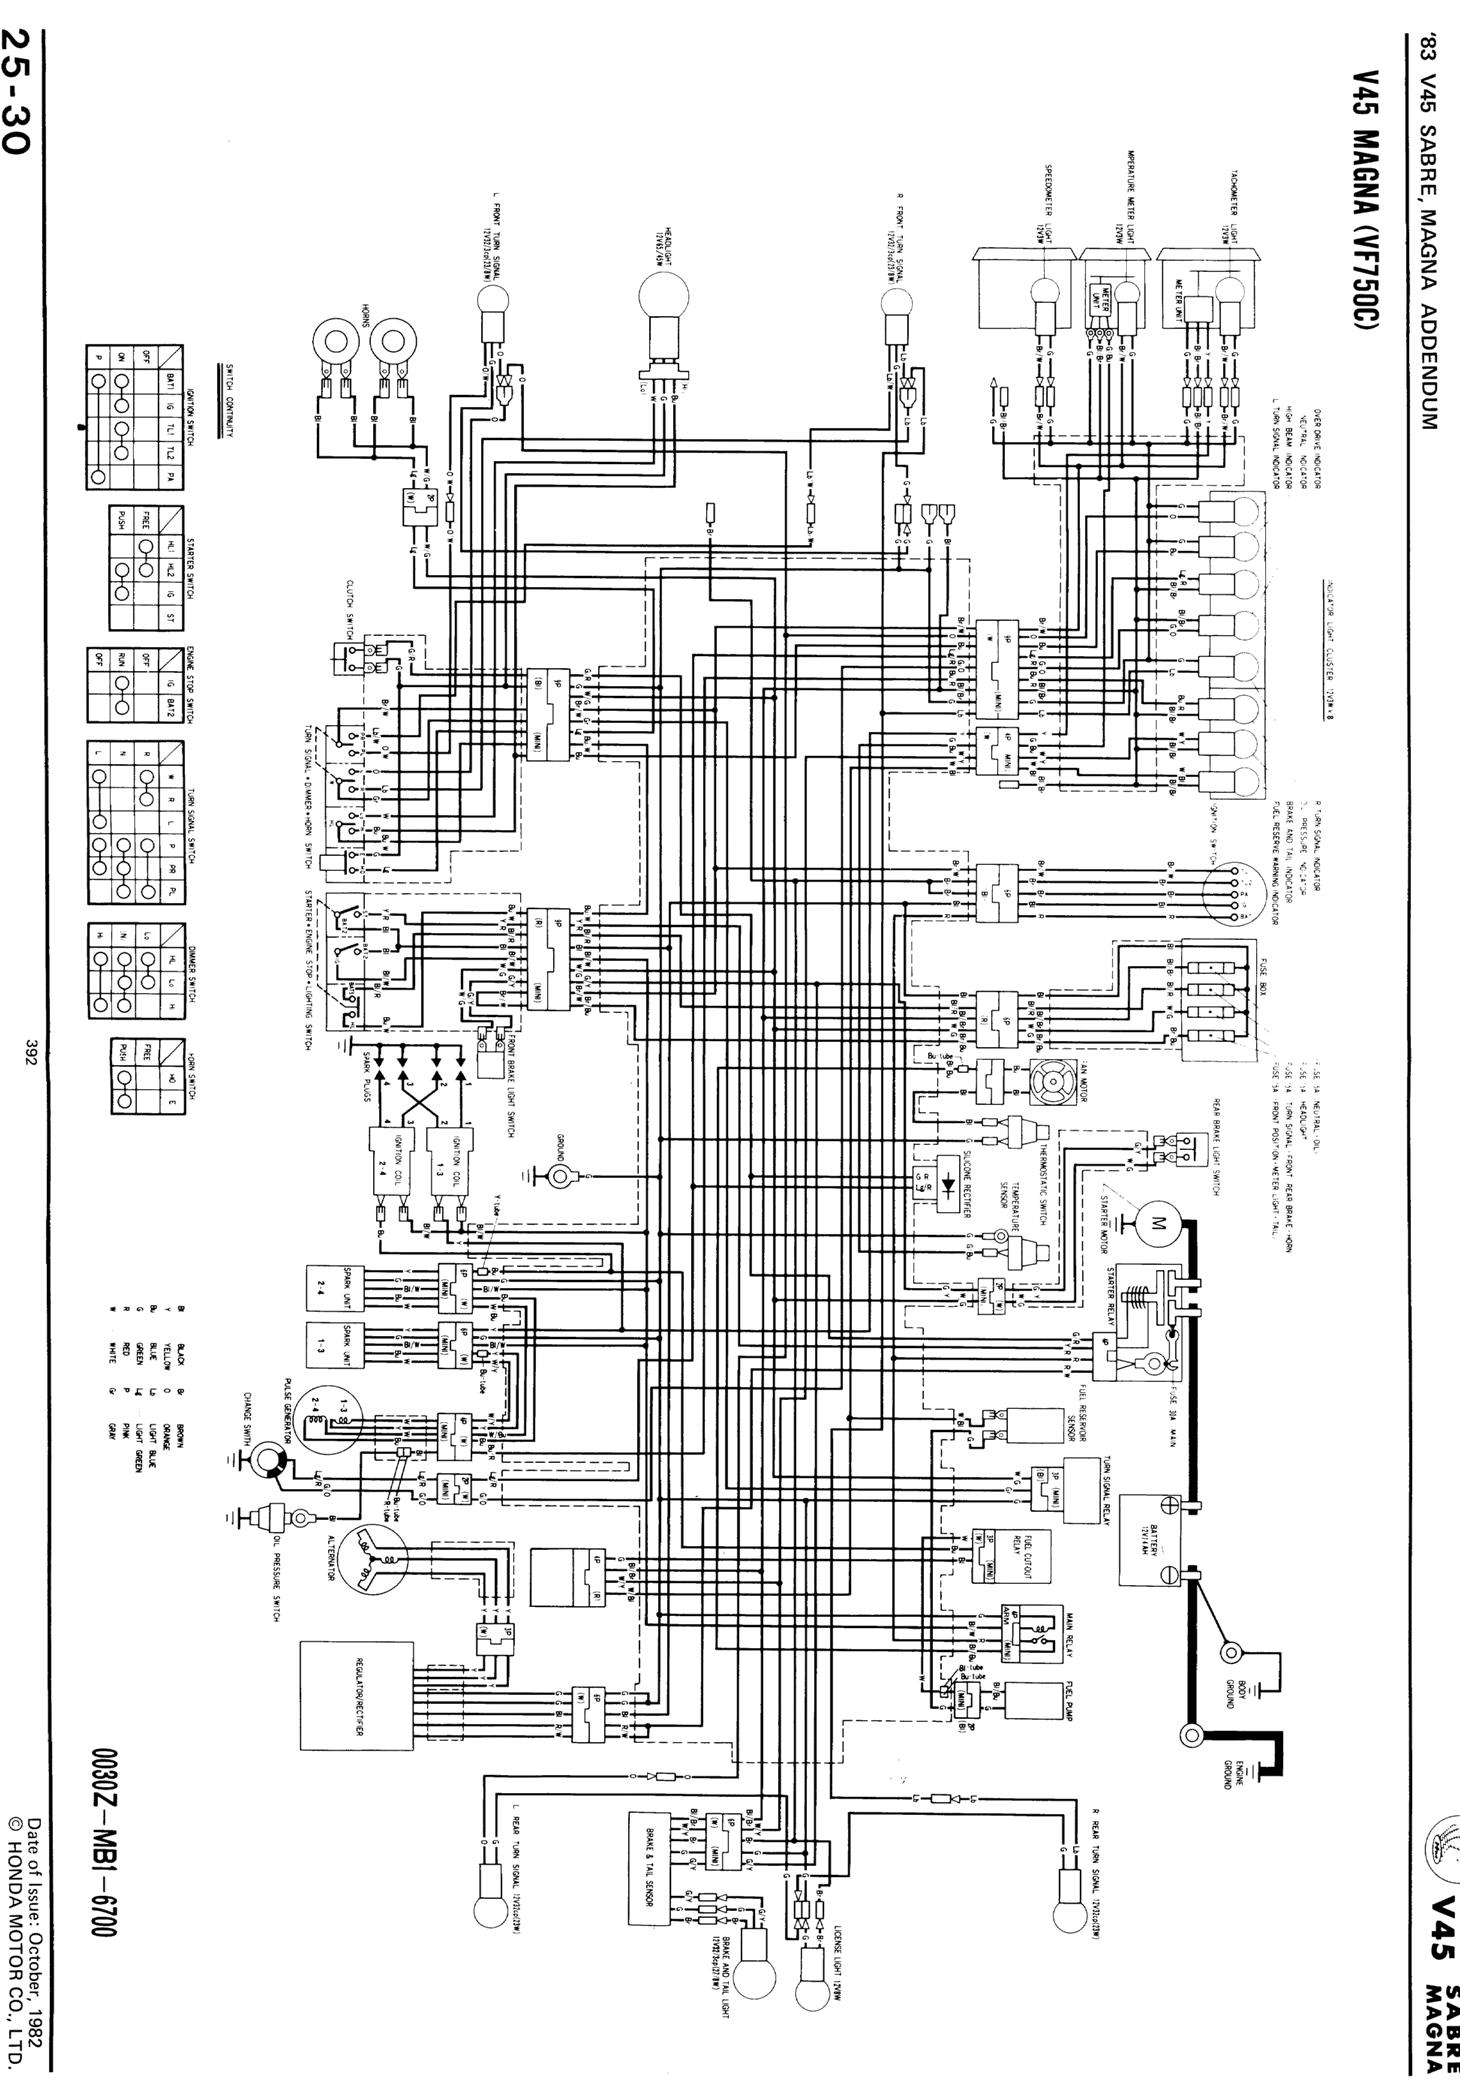 1982 Honda v45 magna wiring diagram #3